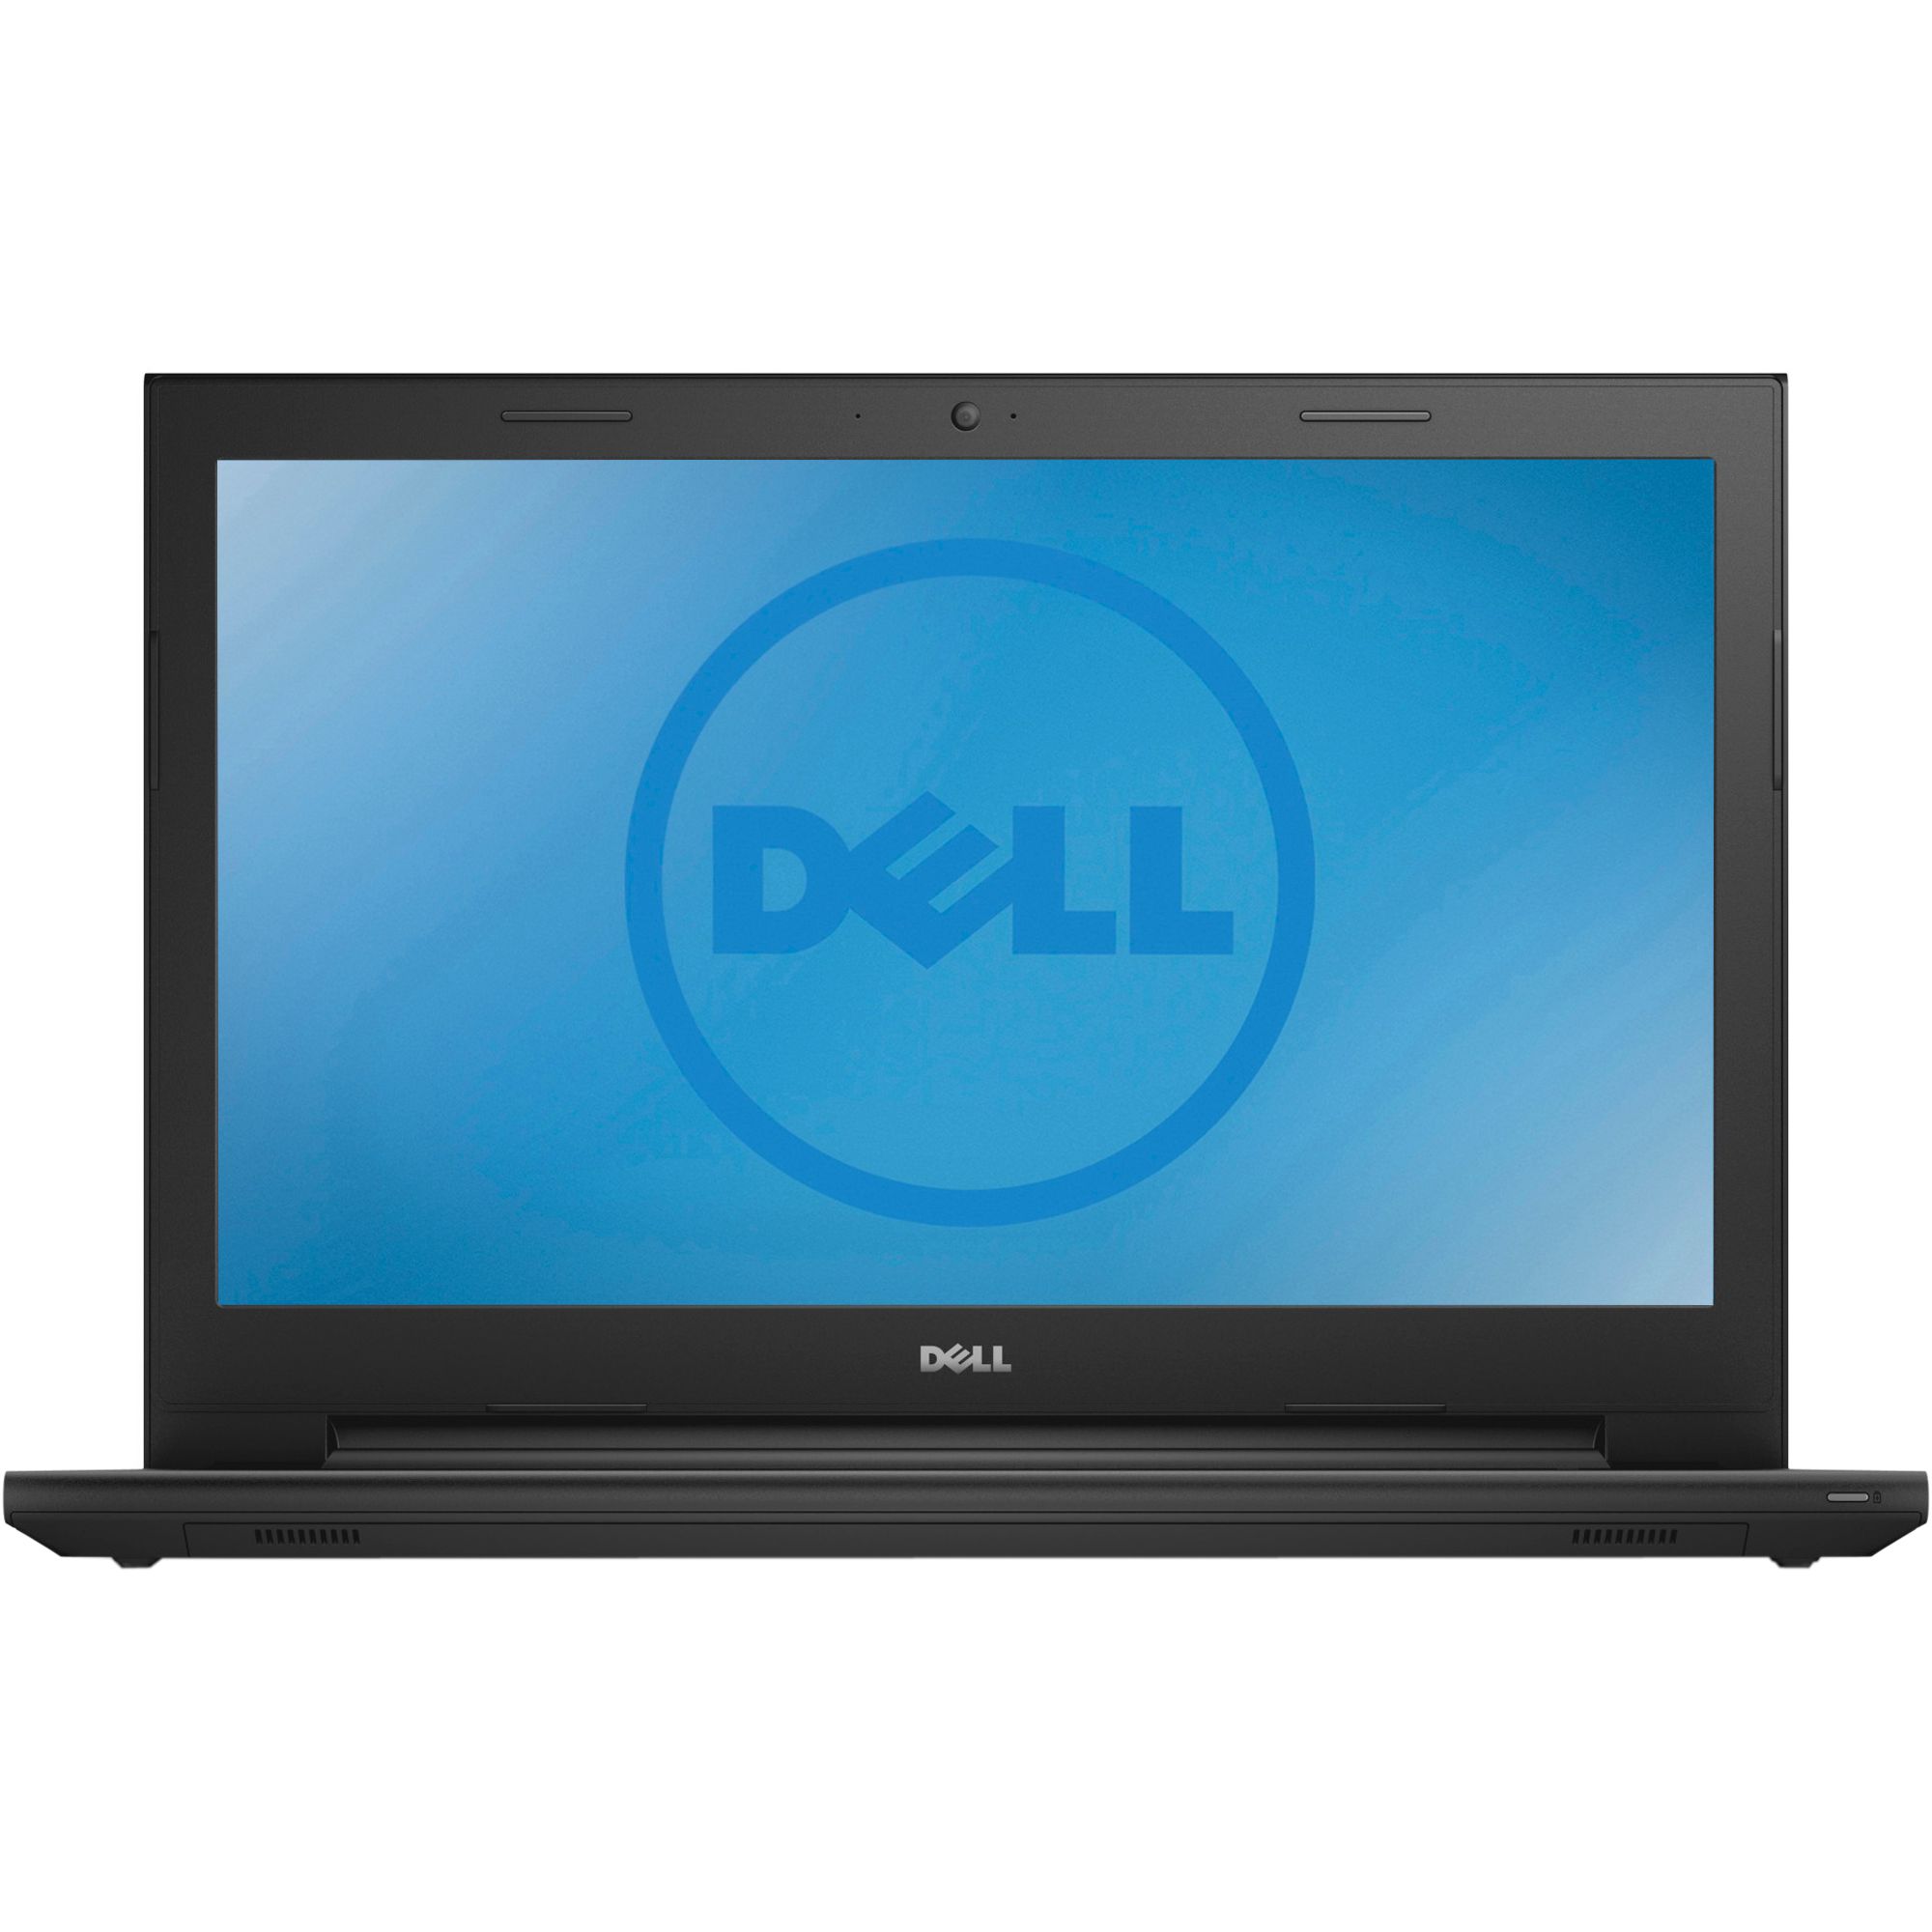 Laptop DELL Inspiron 3542, Intel Core i5-4210U 1.70GHz, 4GB DDR3, 500GB SATA, DVD-RW, 15.6 Inch, Tastatura numerica, Webcam